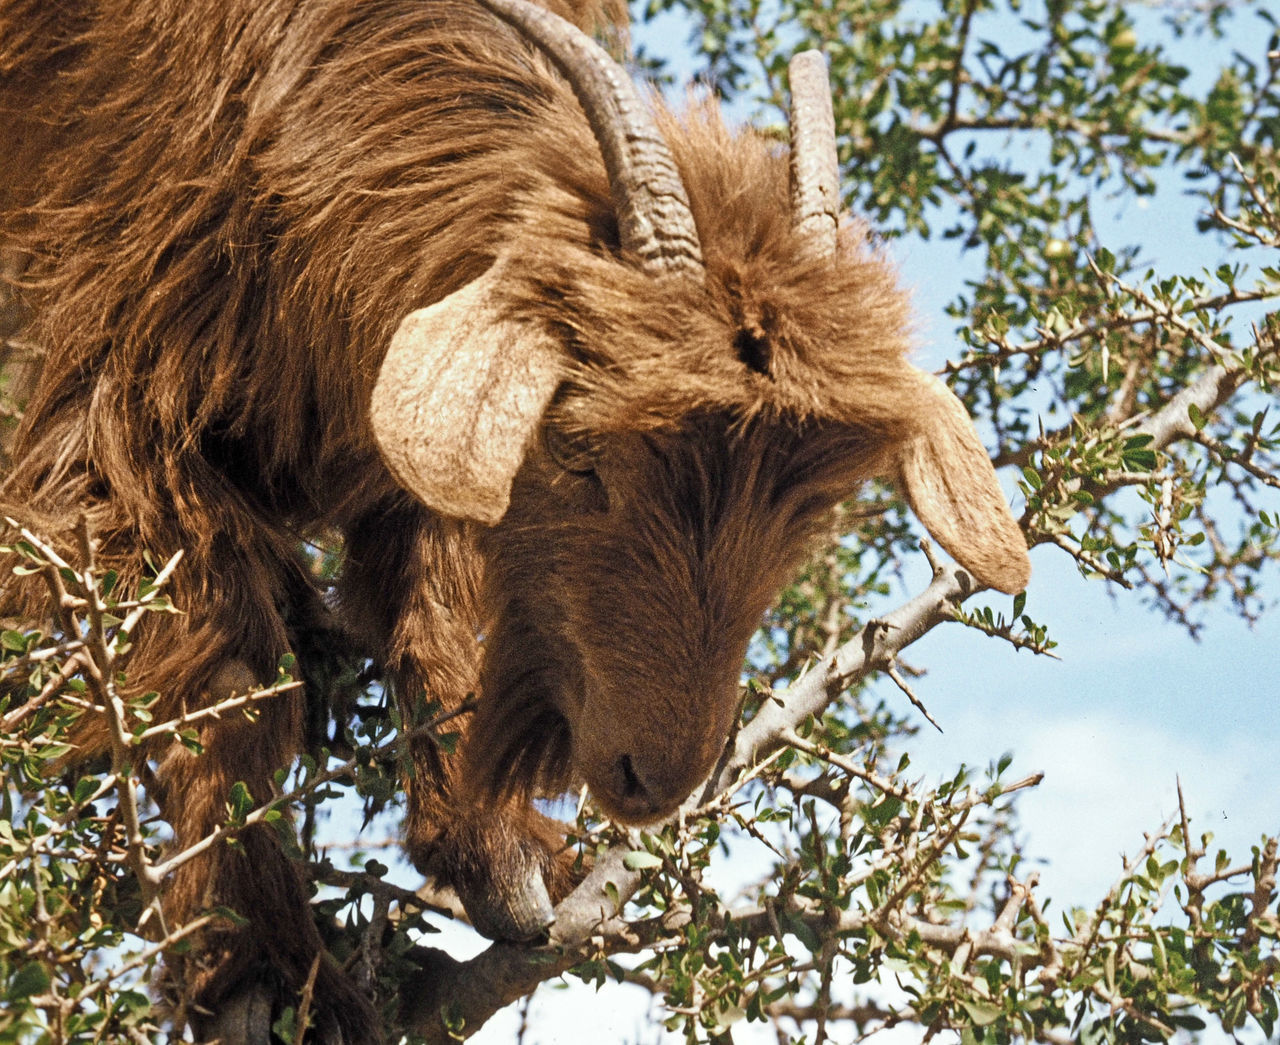 Tree climbing goat